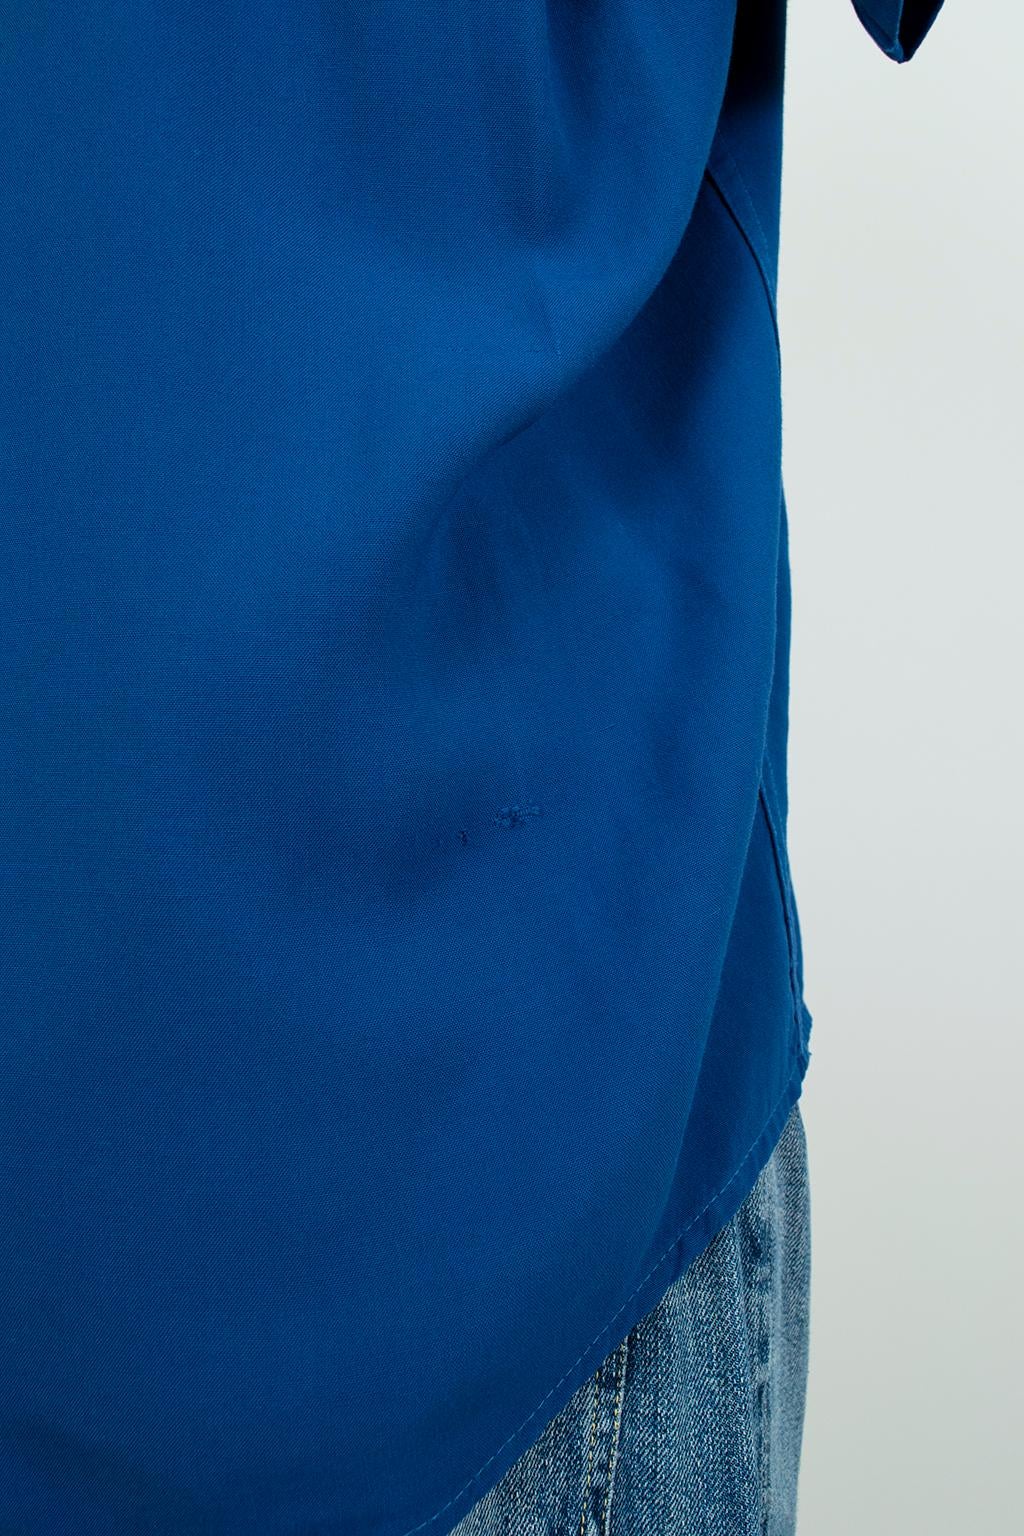 Men’s King Louie Ten Strike Royal Blue Bowling Shirt – Medium, 1950s For Sale 4